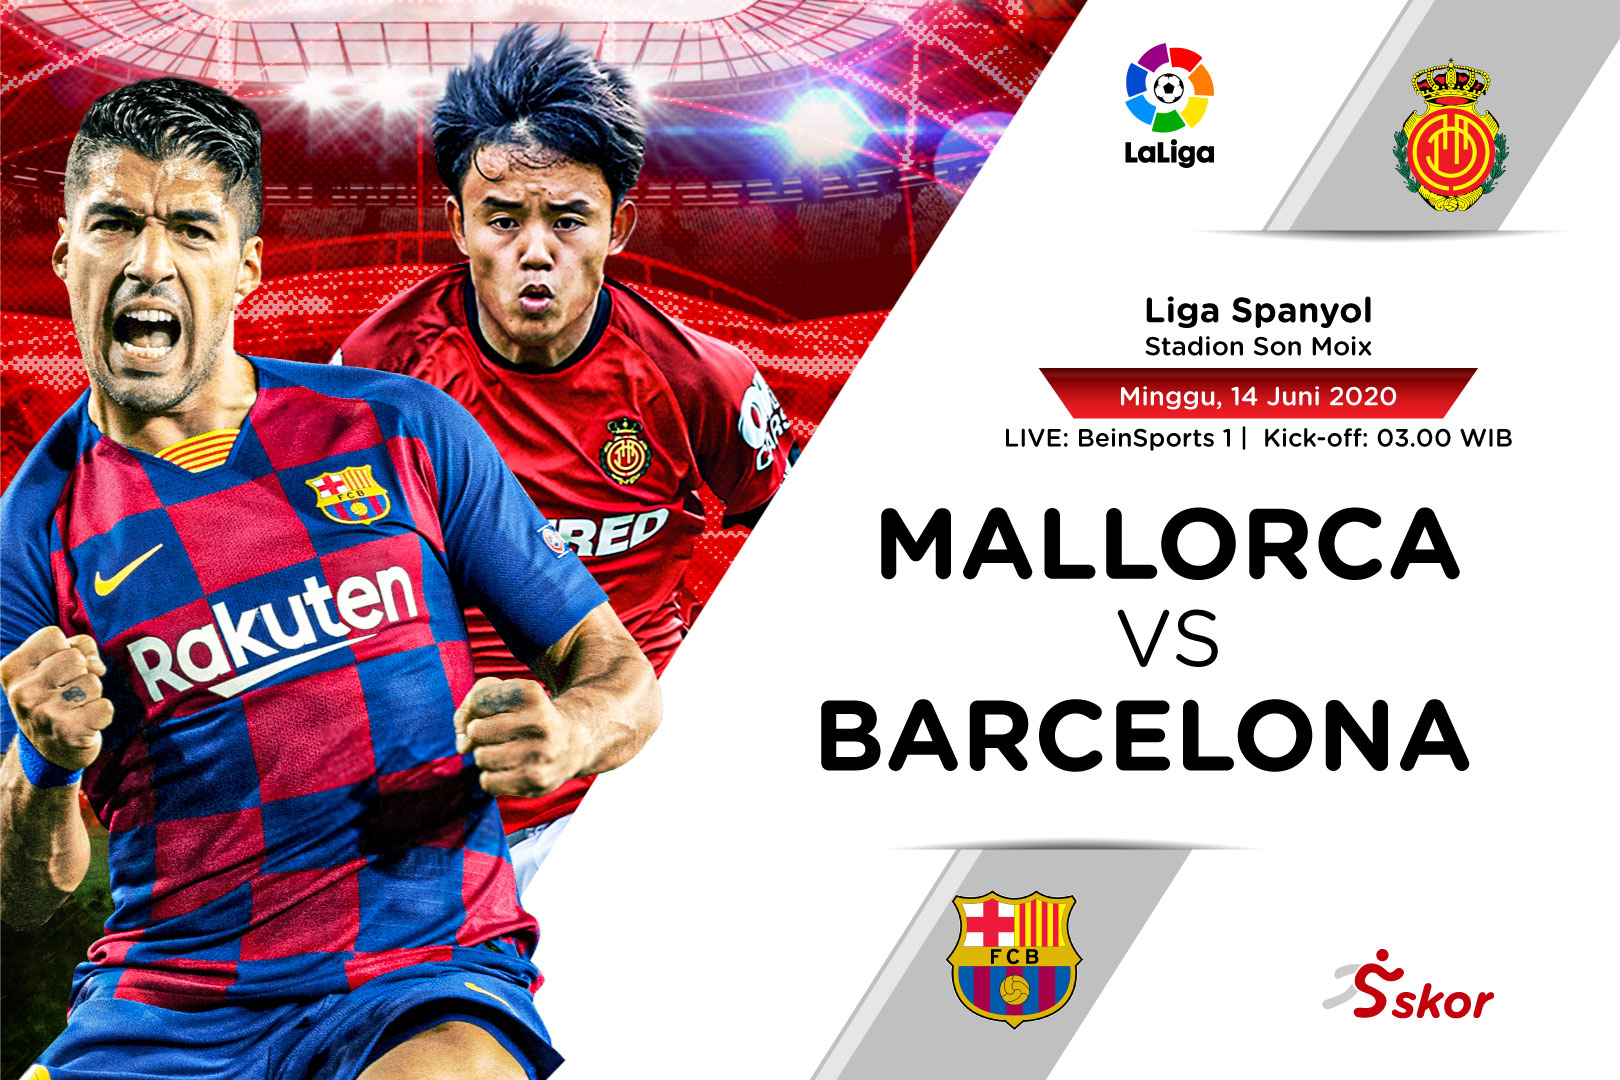 Link LIVE Streaming Liga Spanyol: Real Mallorca vs Barcelona di Vidio